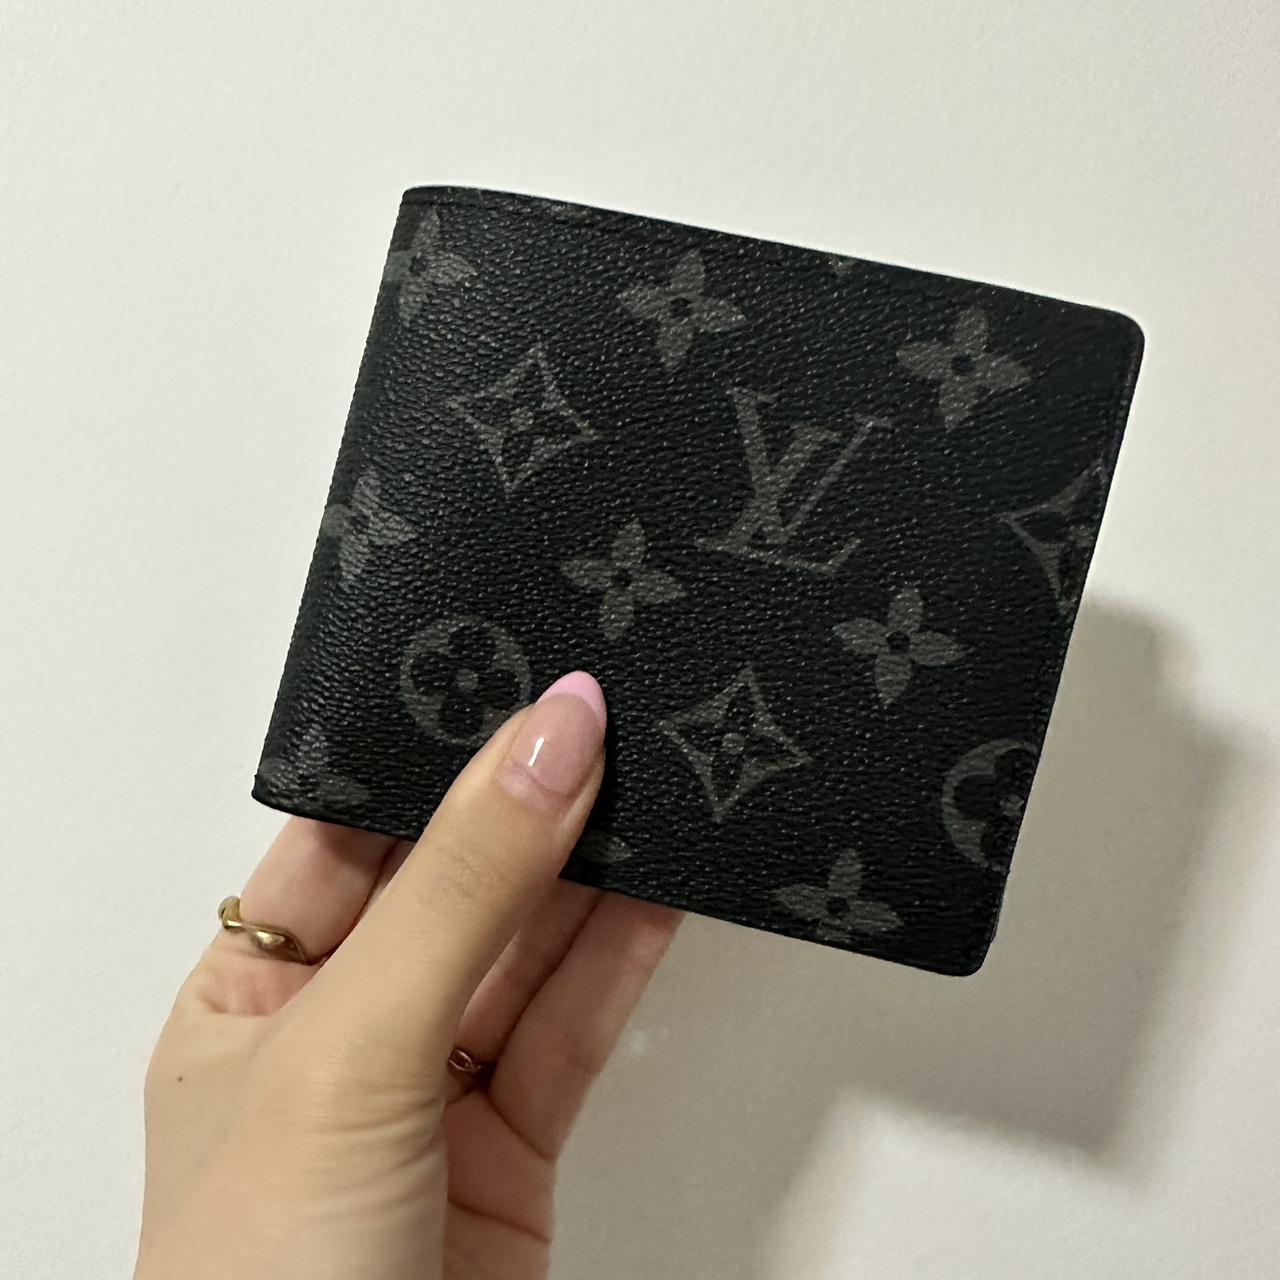 SUPREME LV wallet Louis Vuitton taking offers - Depop